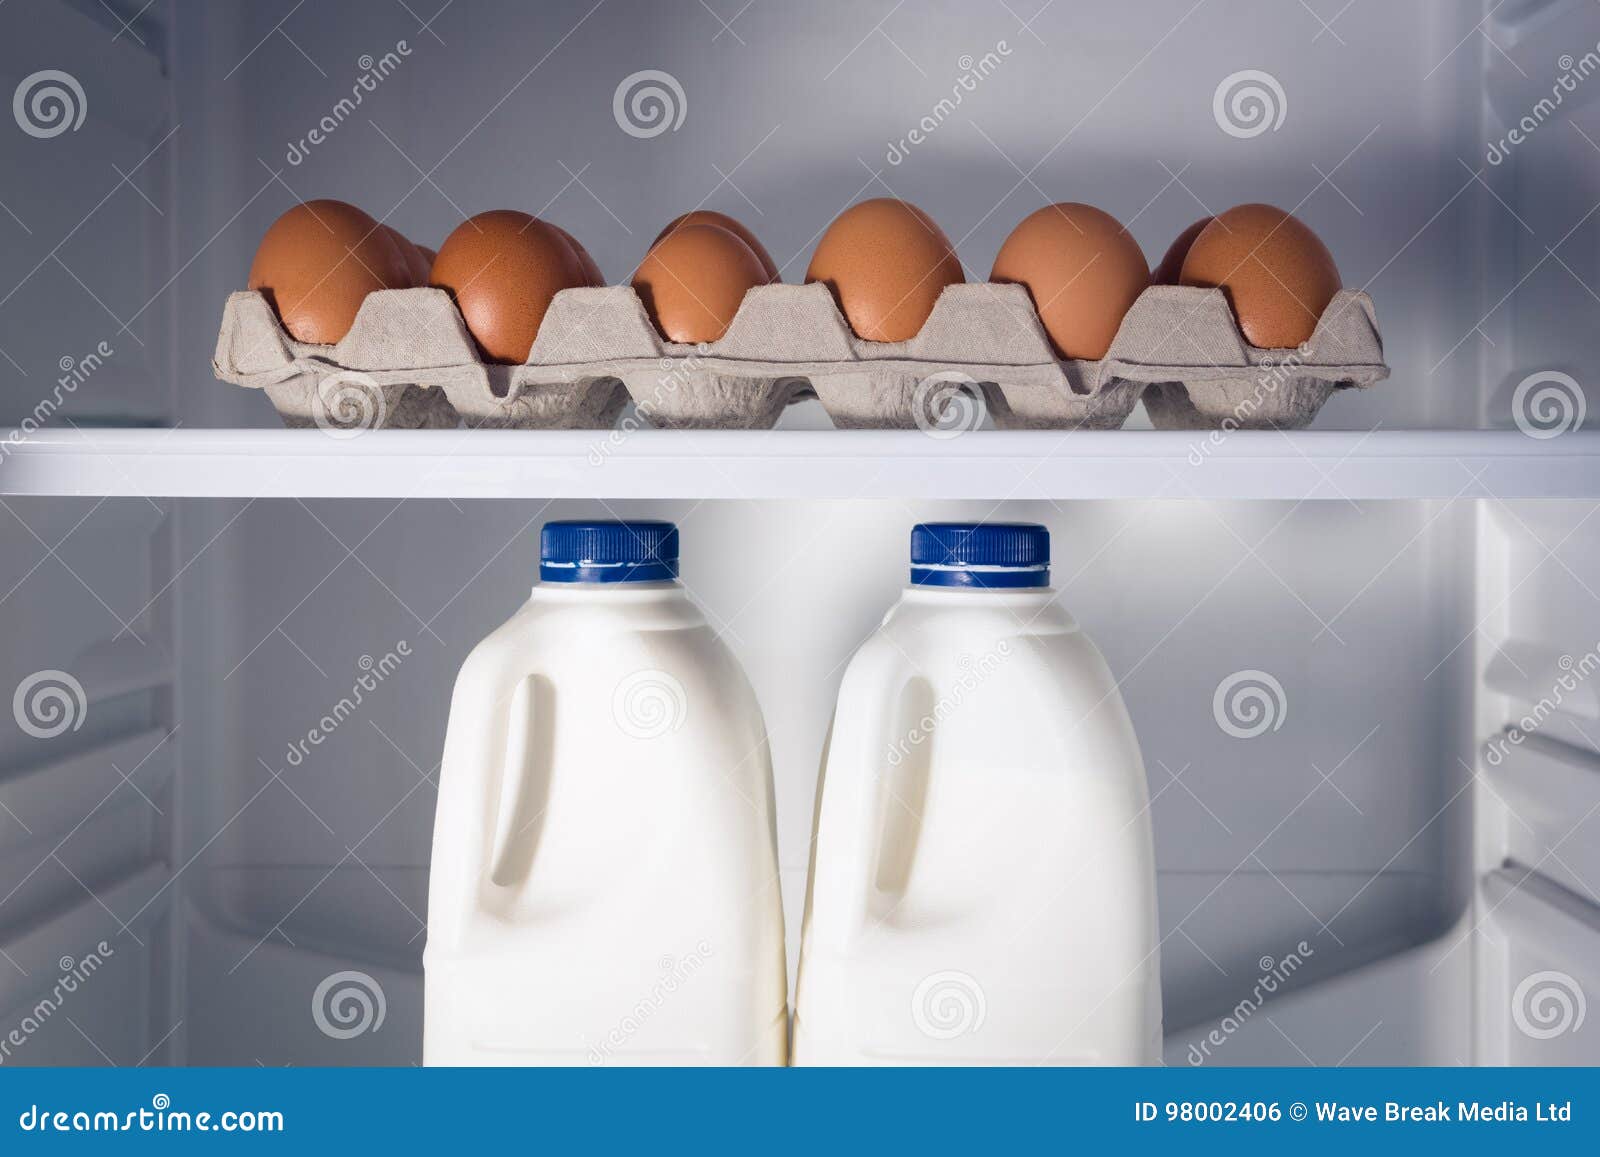 https://thumbs.dreamstime.com/z/egg-carton-milk-bottles-refrigerator-egg-carton-milk-bottles-open-refrigerator-98002406.jpg